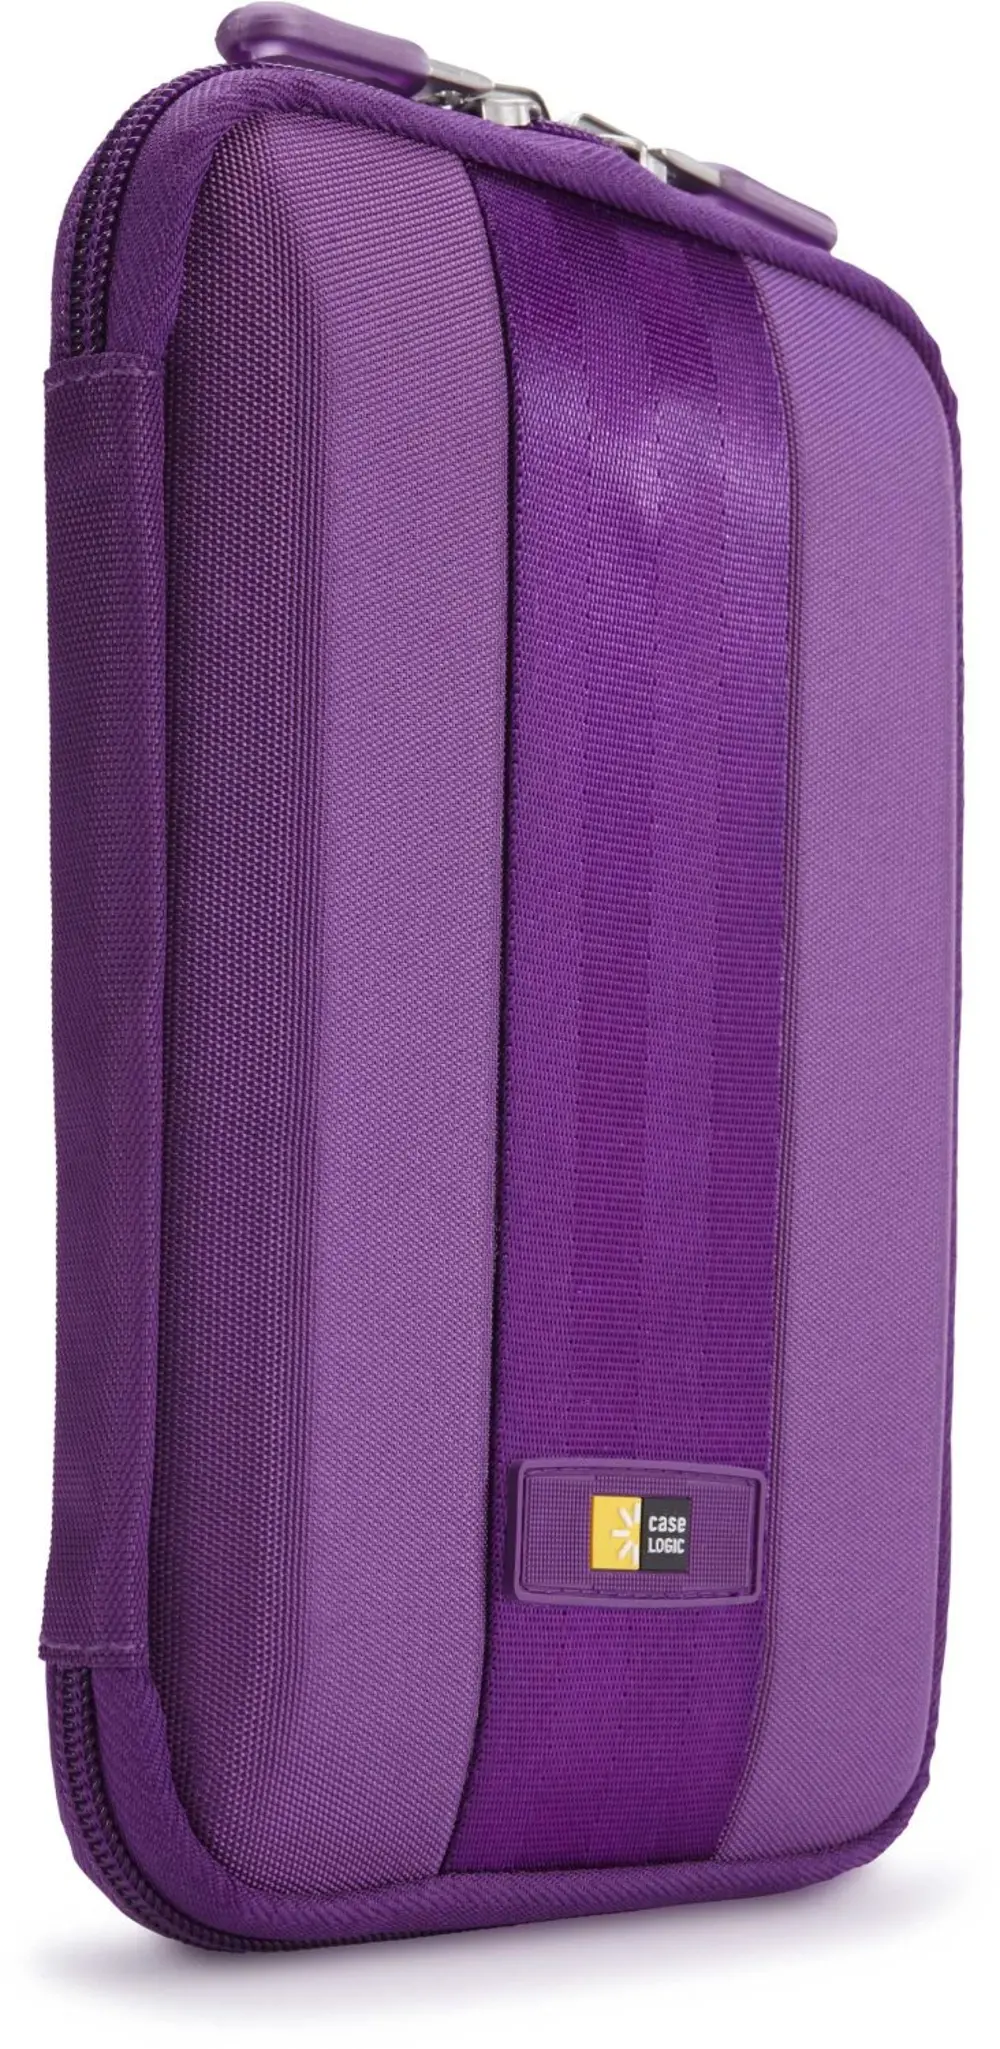 QTS20 Case Logic Protective 7 Inch Tablet Case - Purple-1